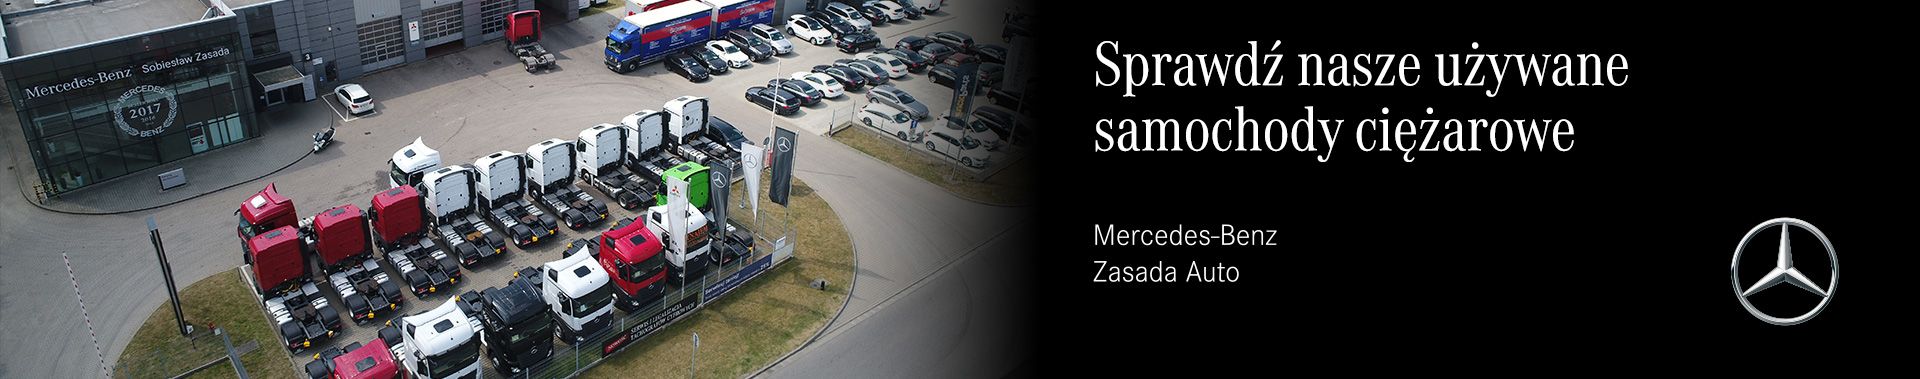 Mercedes Sobiesław Zasada Automotive top banner